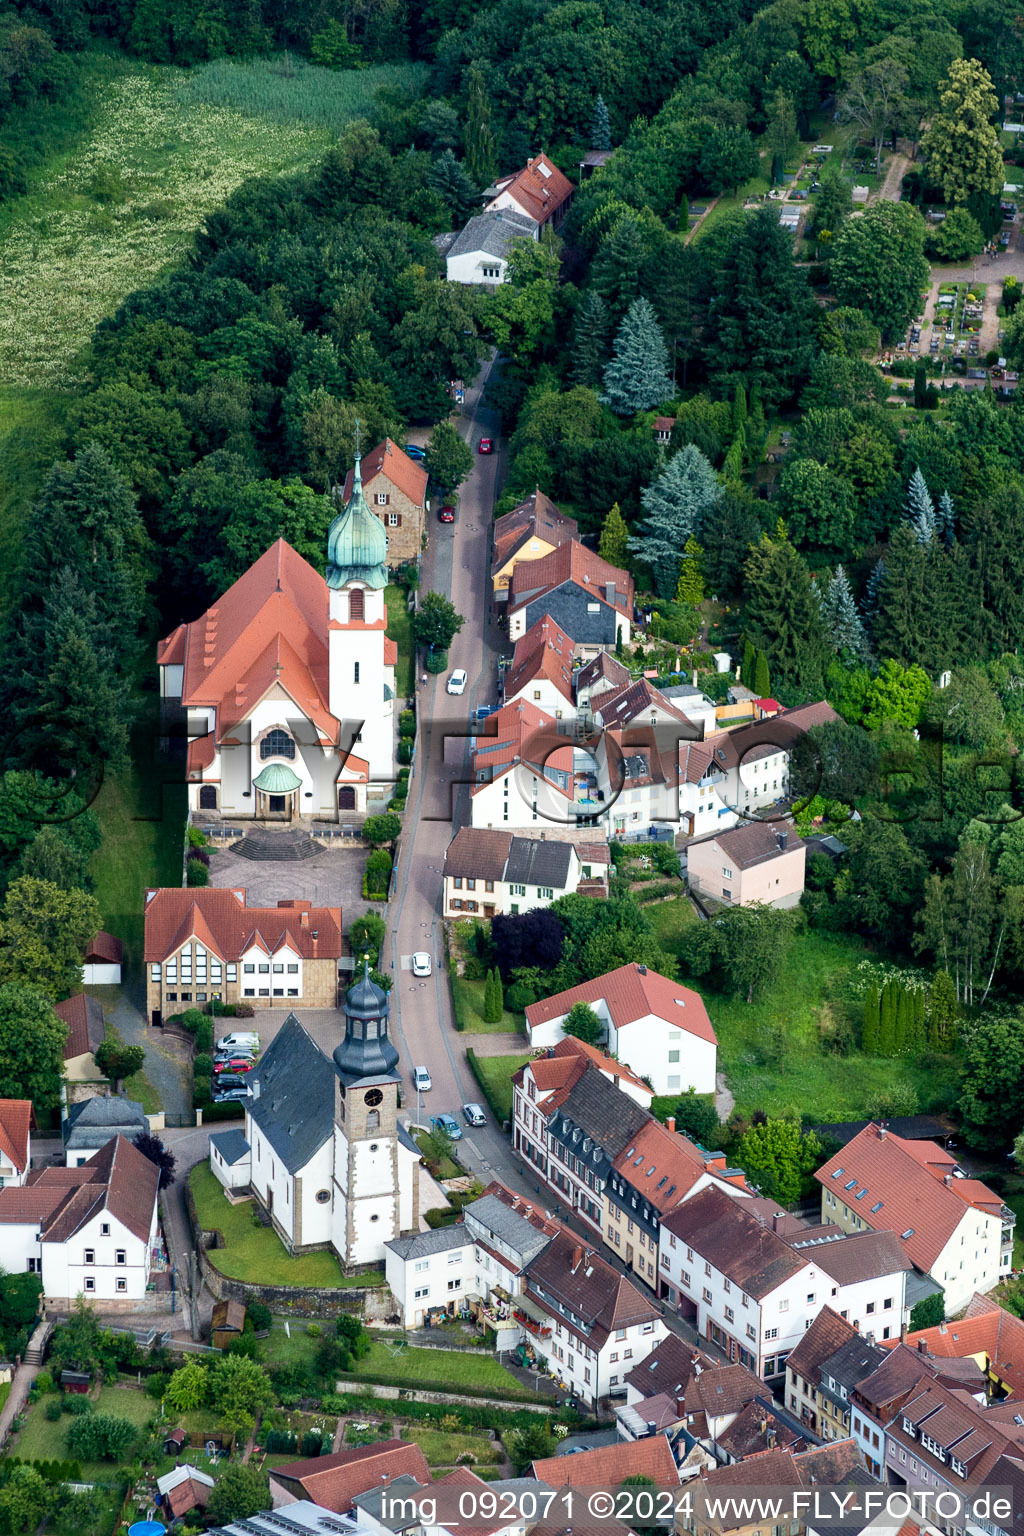 Aerial photograpy of Church building of catholic Church Herz Jesu in Winnweiler in the state Rhineland-Palatinate, Germany